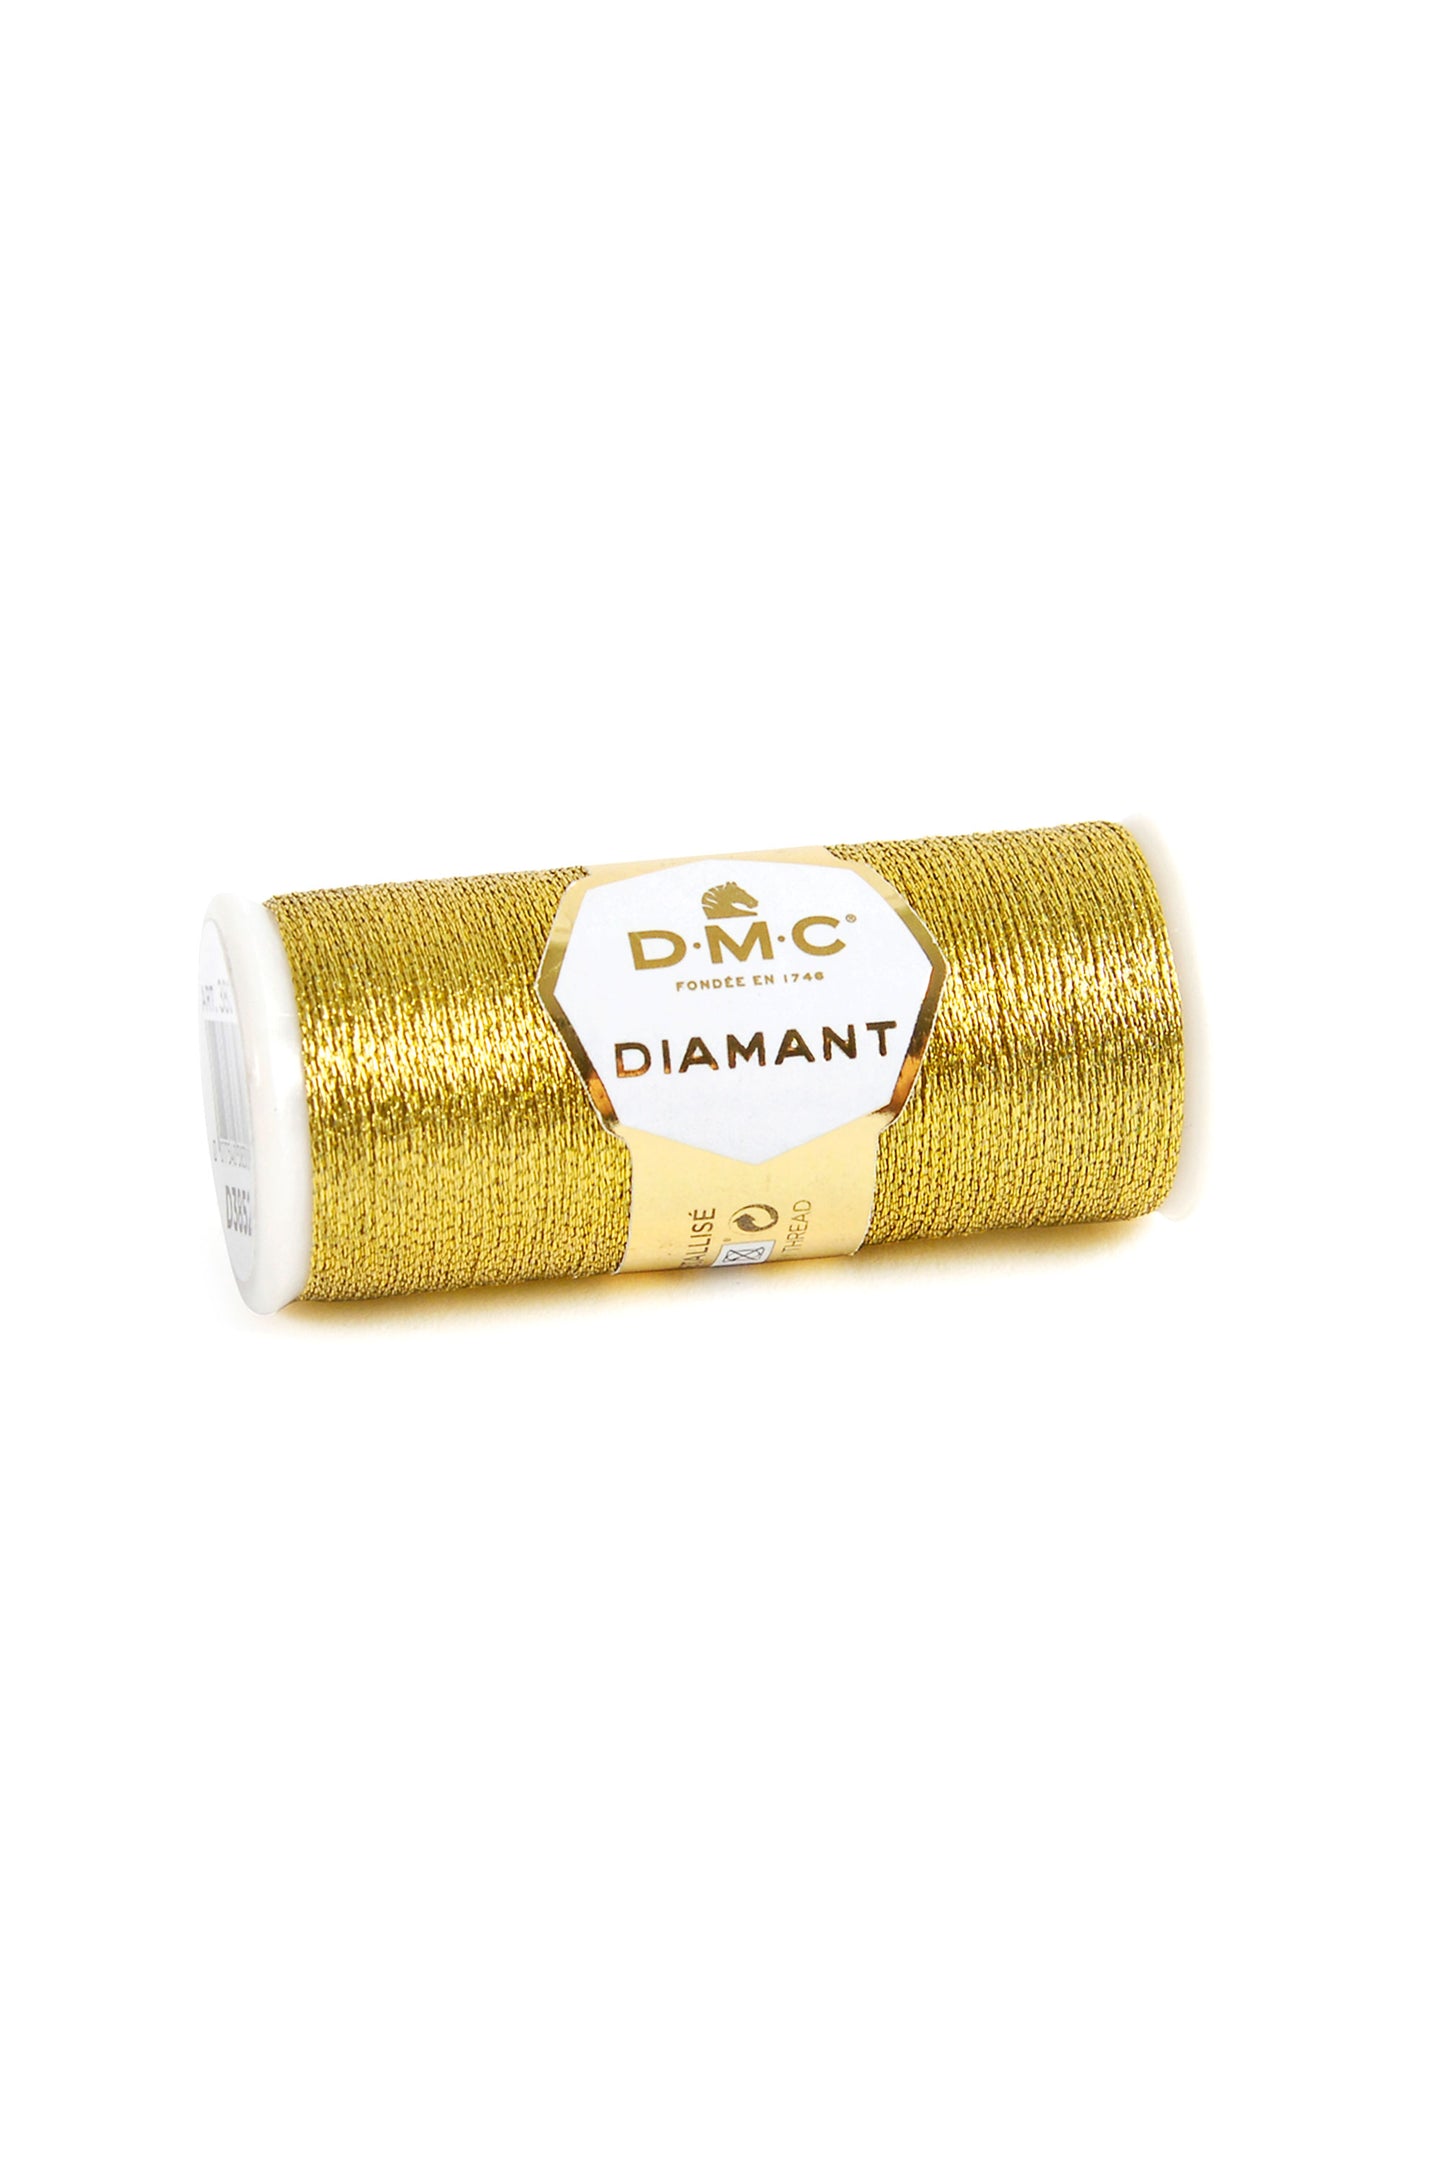 D3852 Gold – DMC Diamant metallic thread